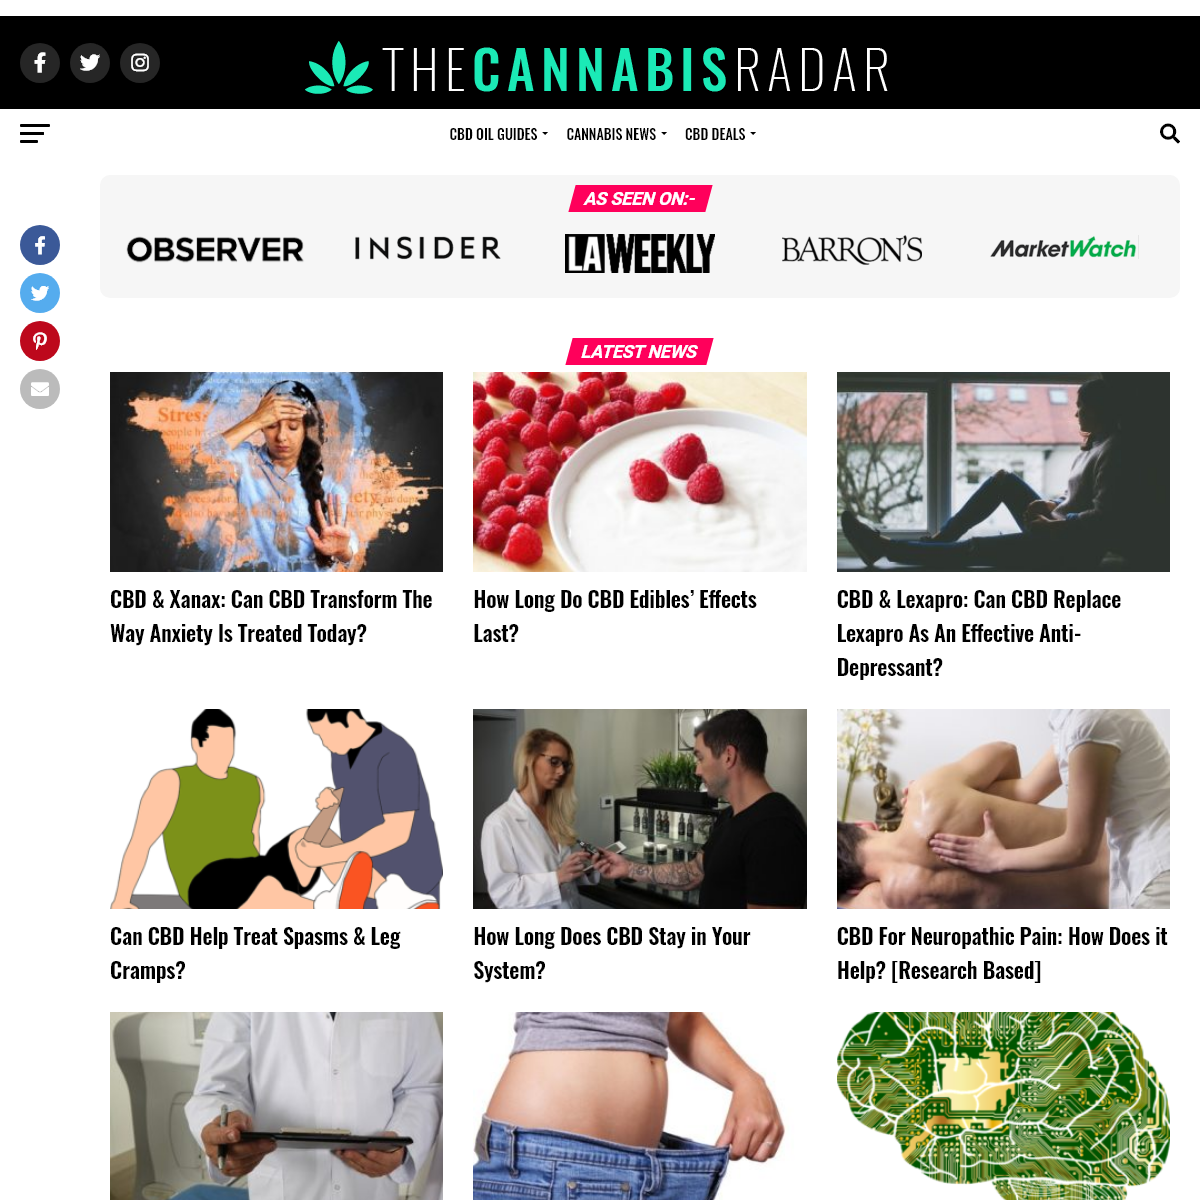 A complete backup of thecannabisradar.com